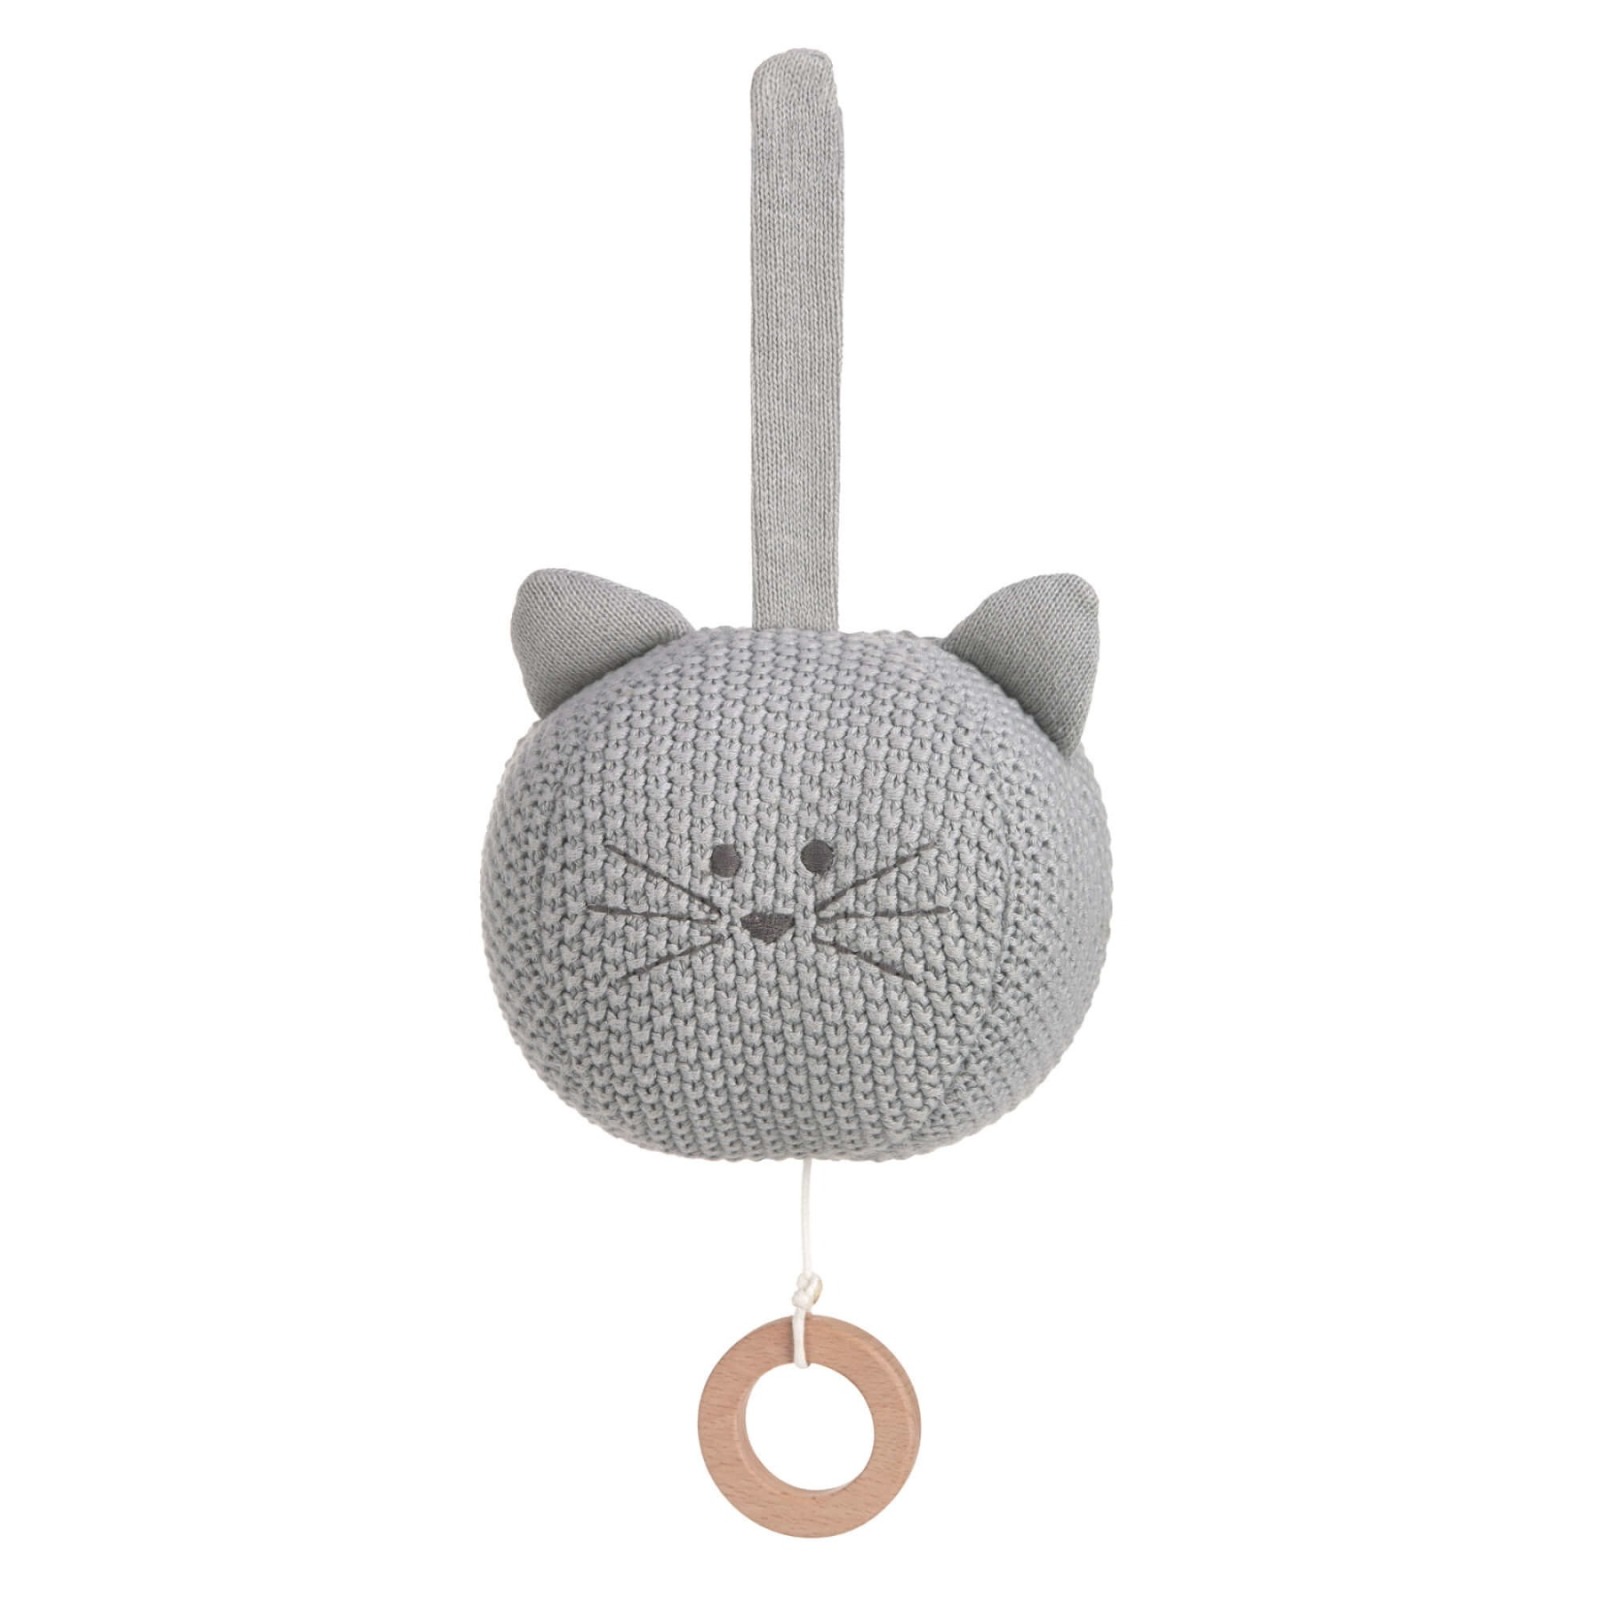 Spieluhr - Knitted Musical, Little Chums Cat